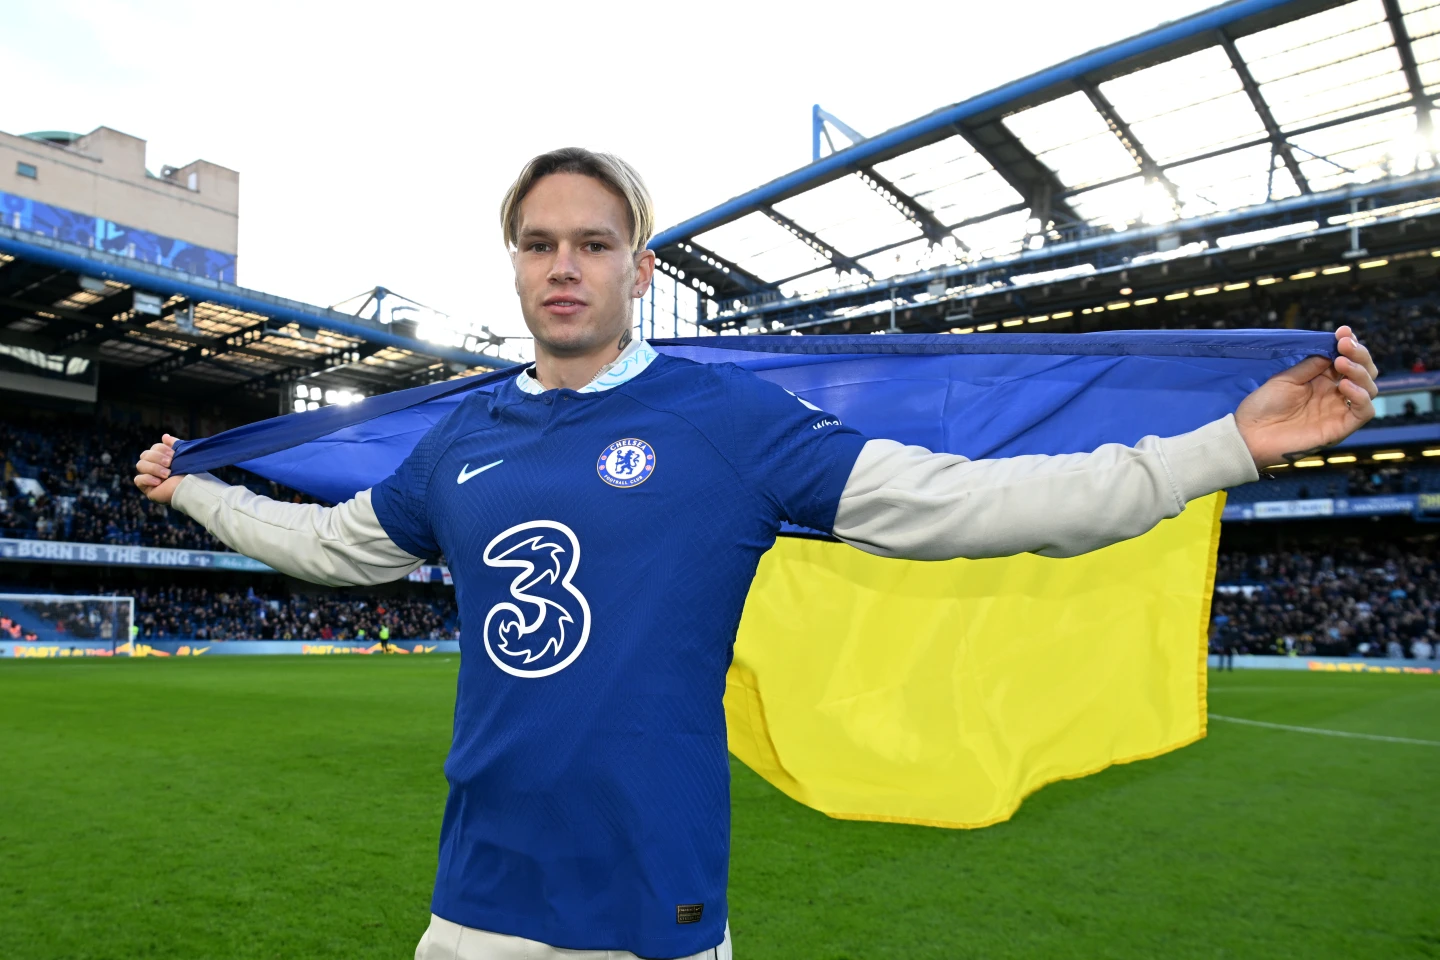 Mudryk: Chelsea academy players dey provoke say dem no get future for Stamford Bridge